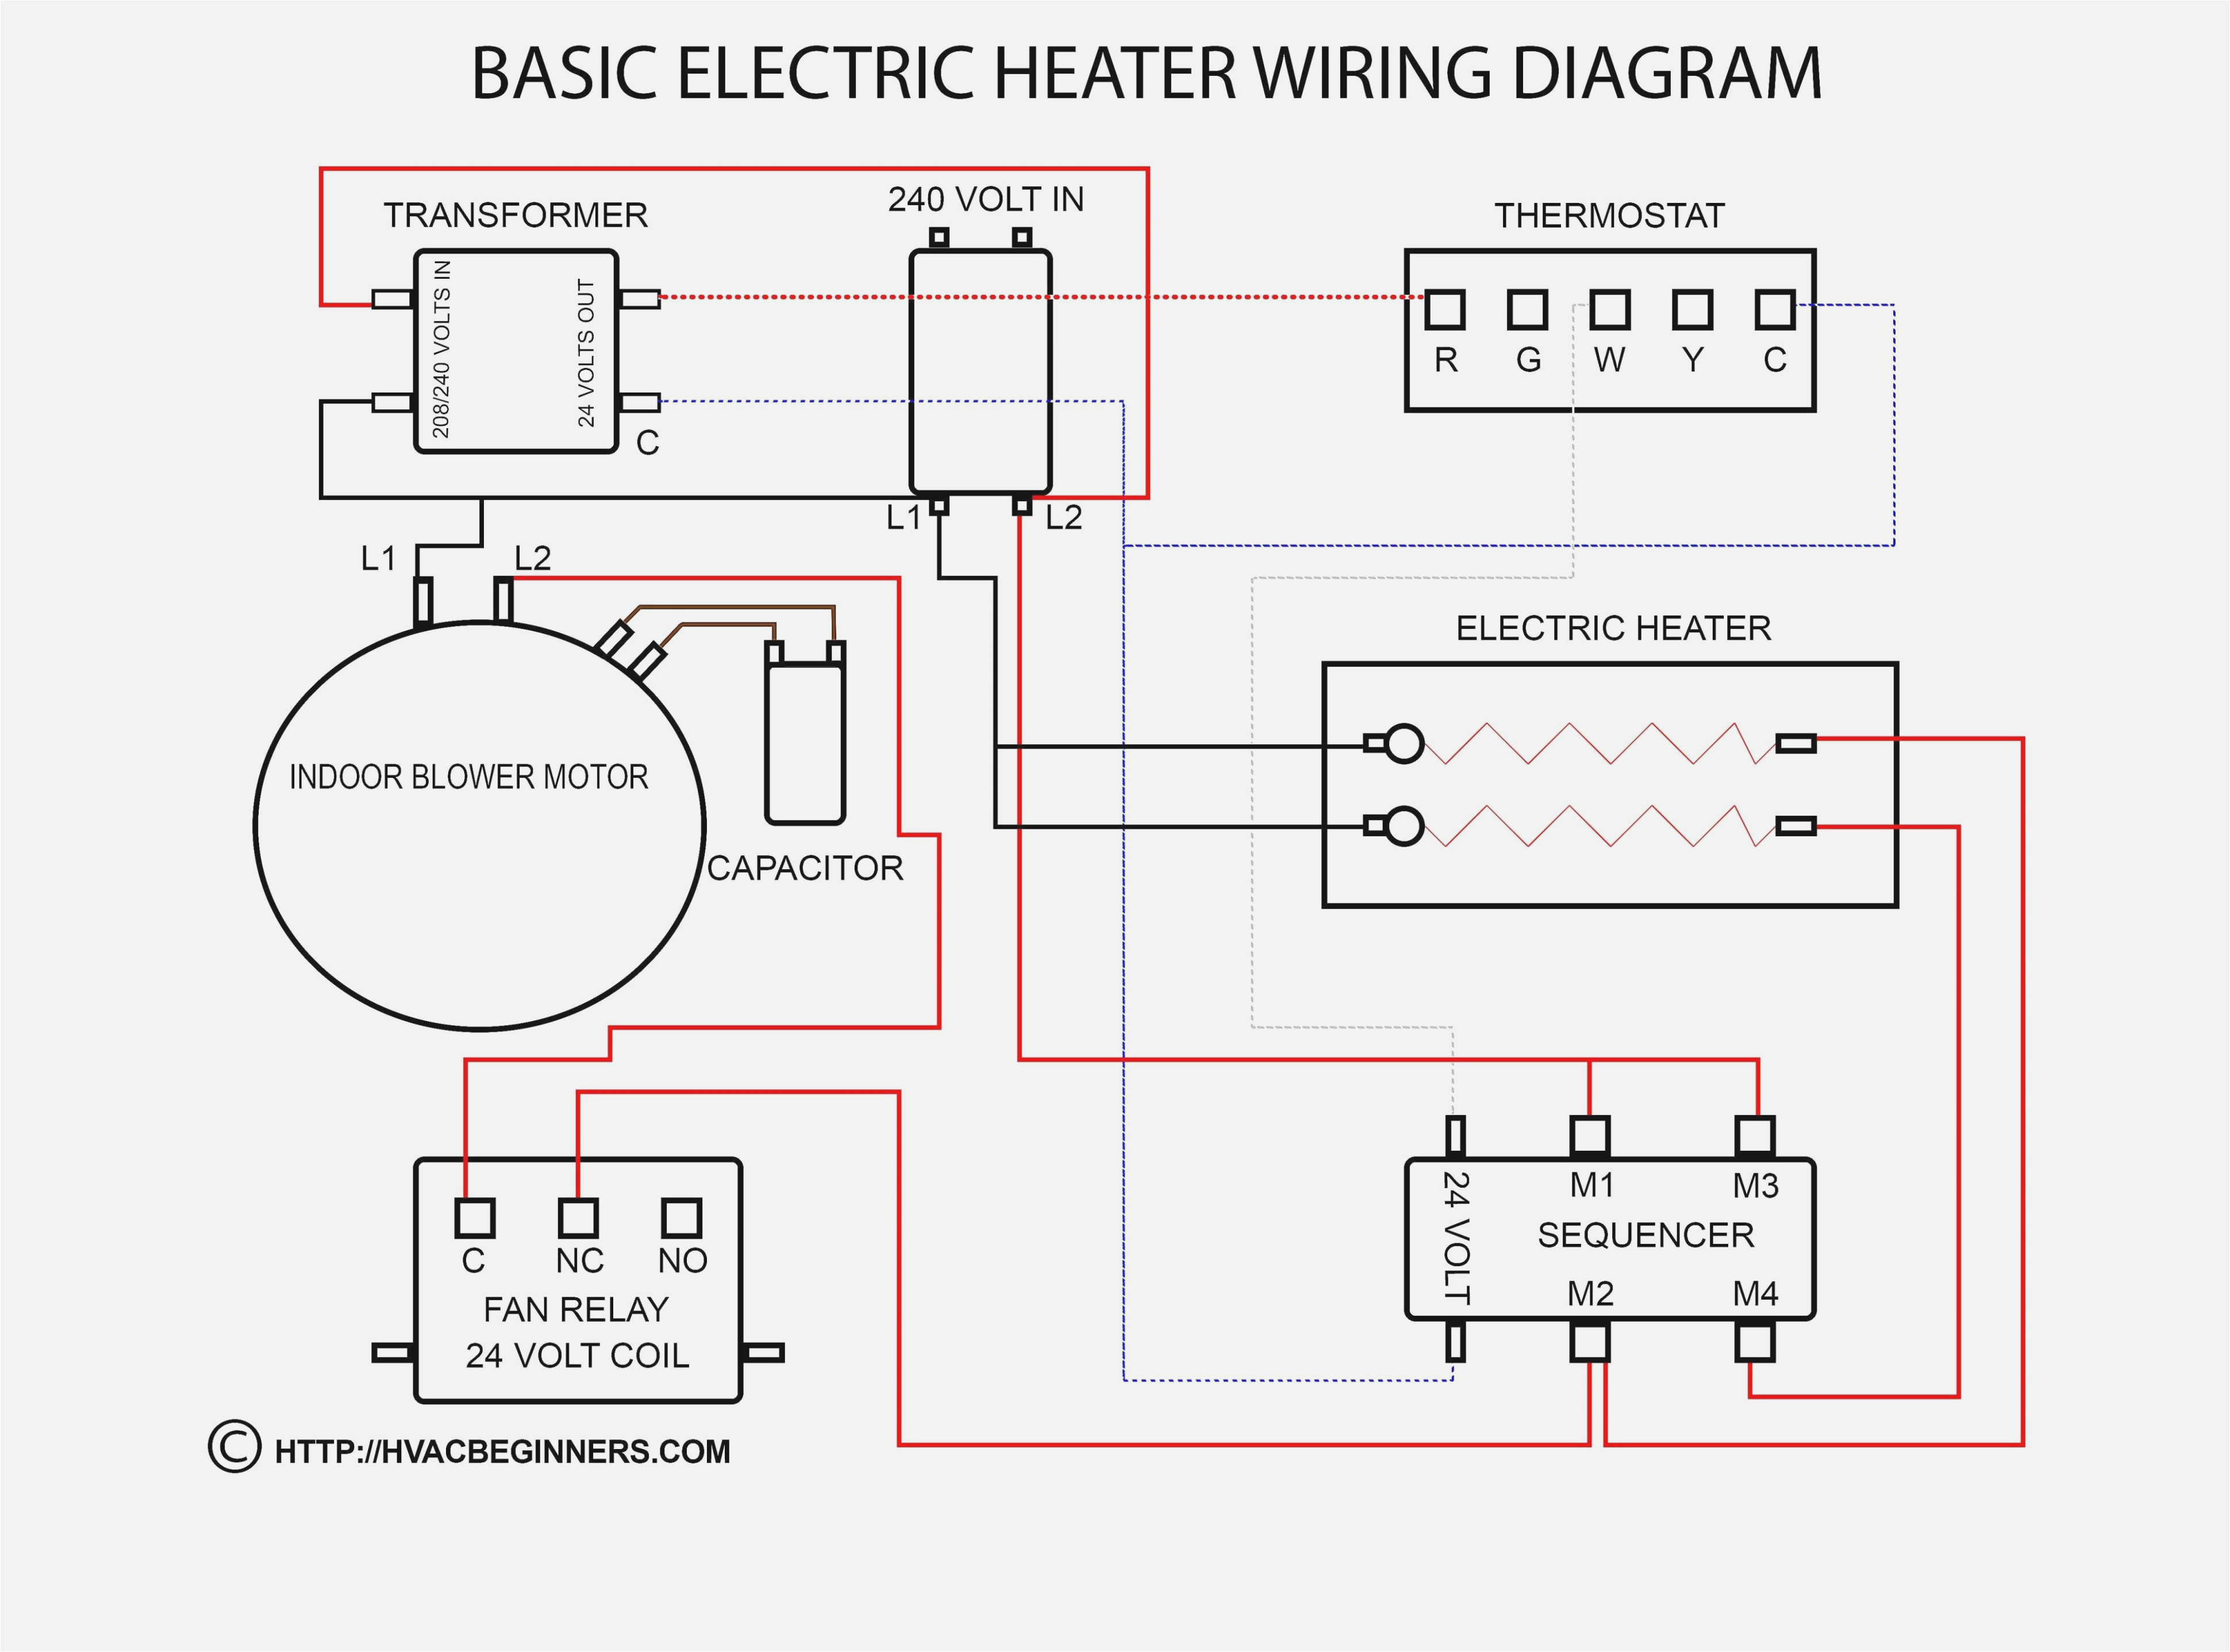 electrical house wiring hindi wiring diagram meta house wiring pdf in hindi electrical wiring book in